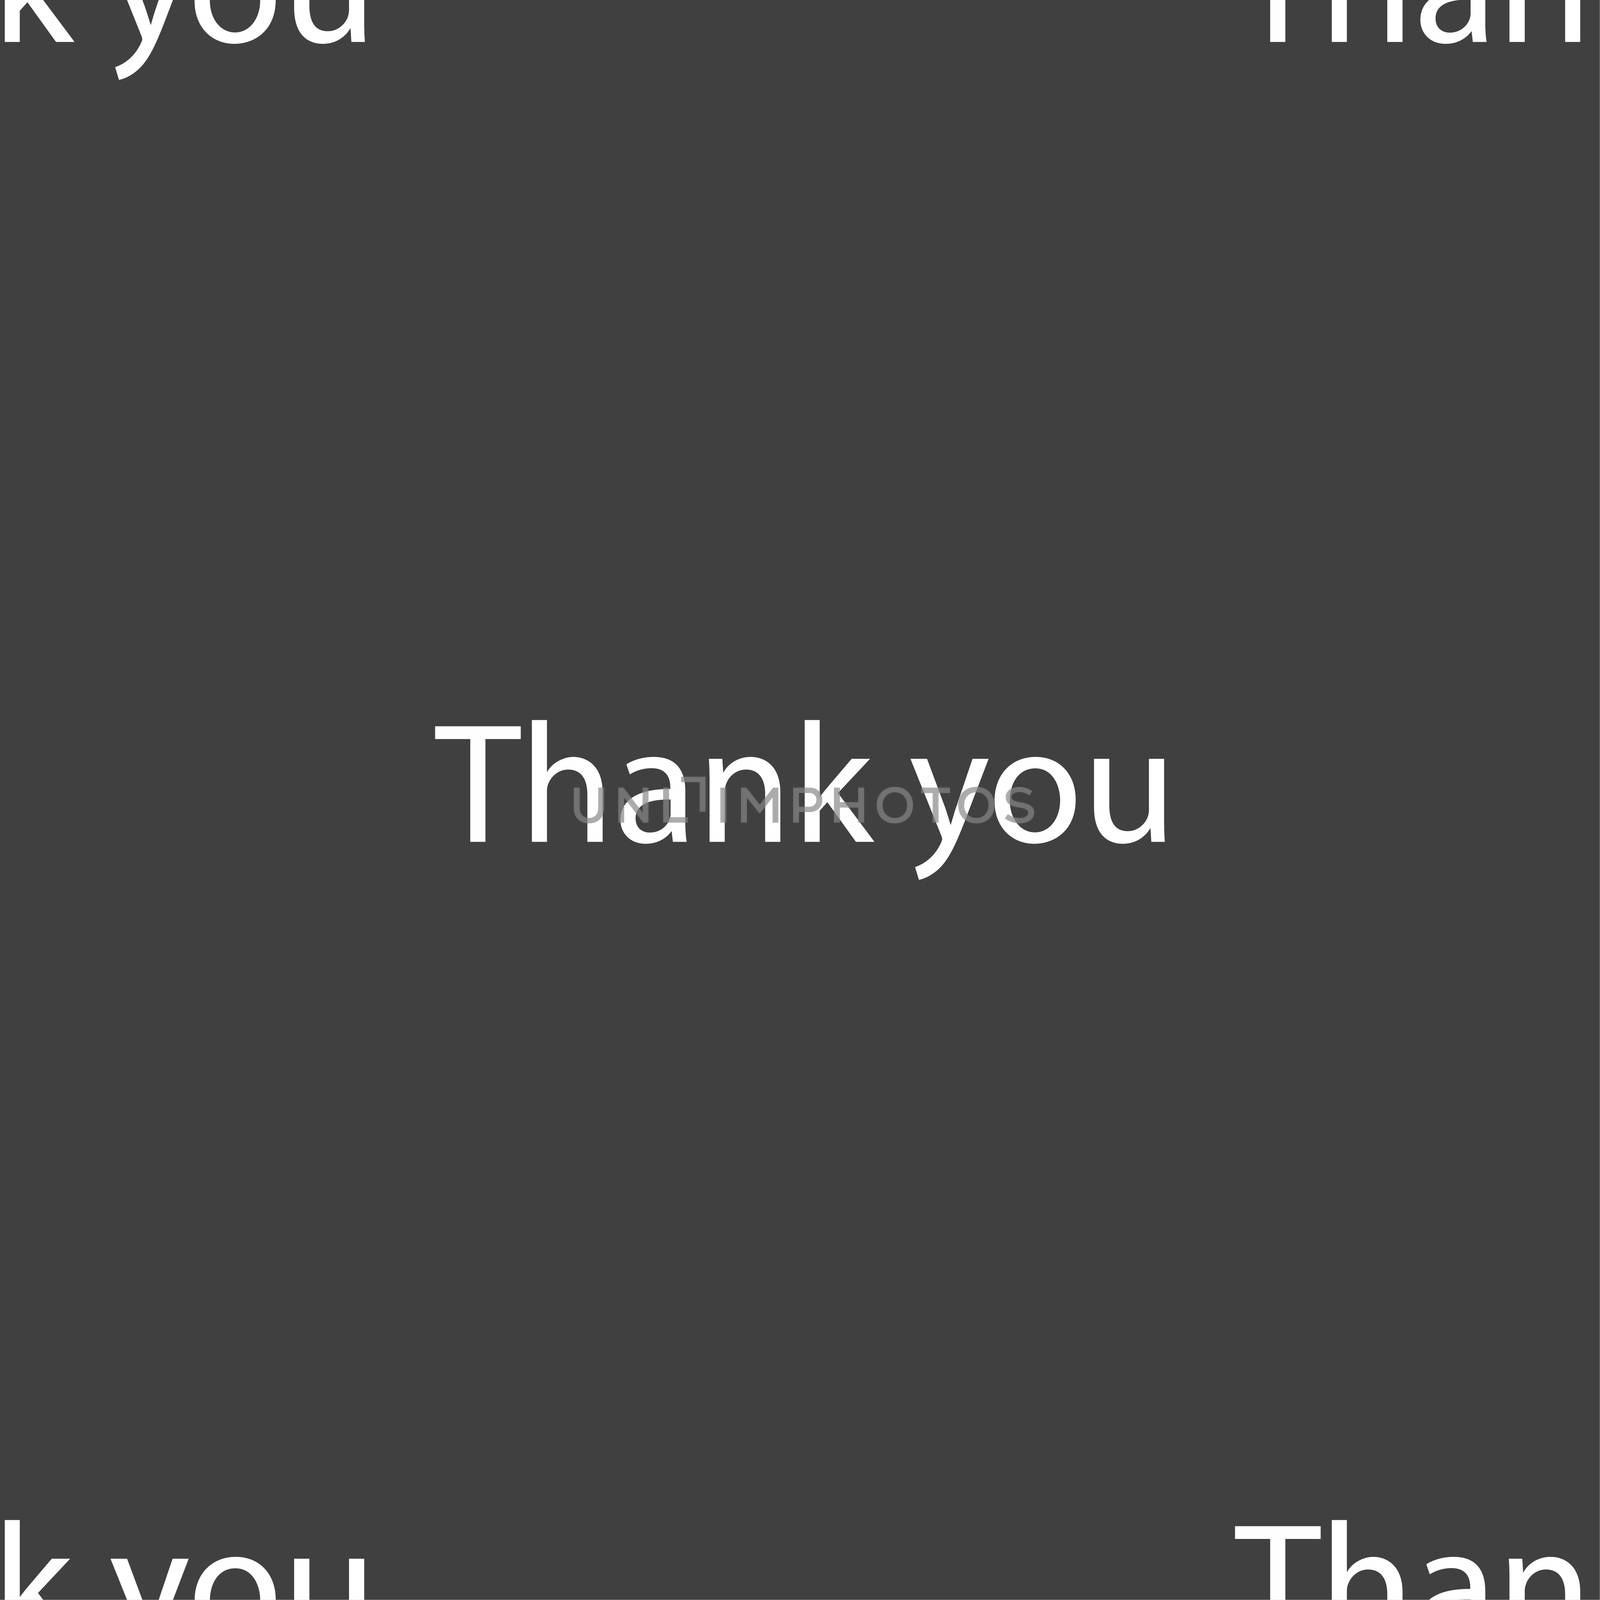 Thank you sign icon. Gratitude symbol. Seamless pattern on a gray background.  by serhii_lohvyniuk